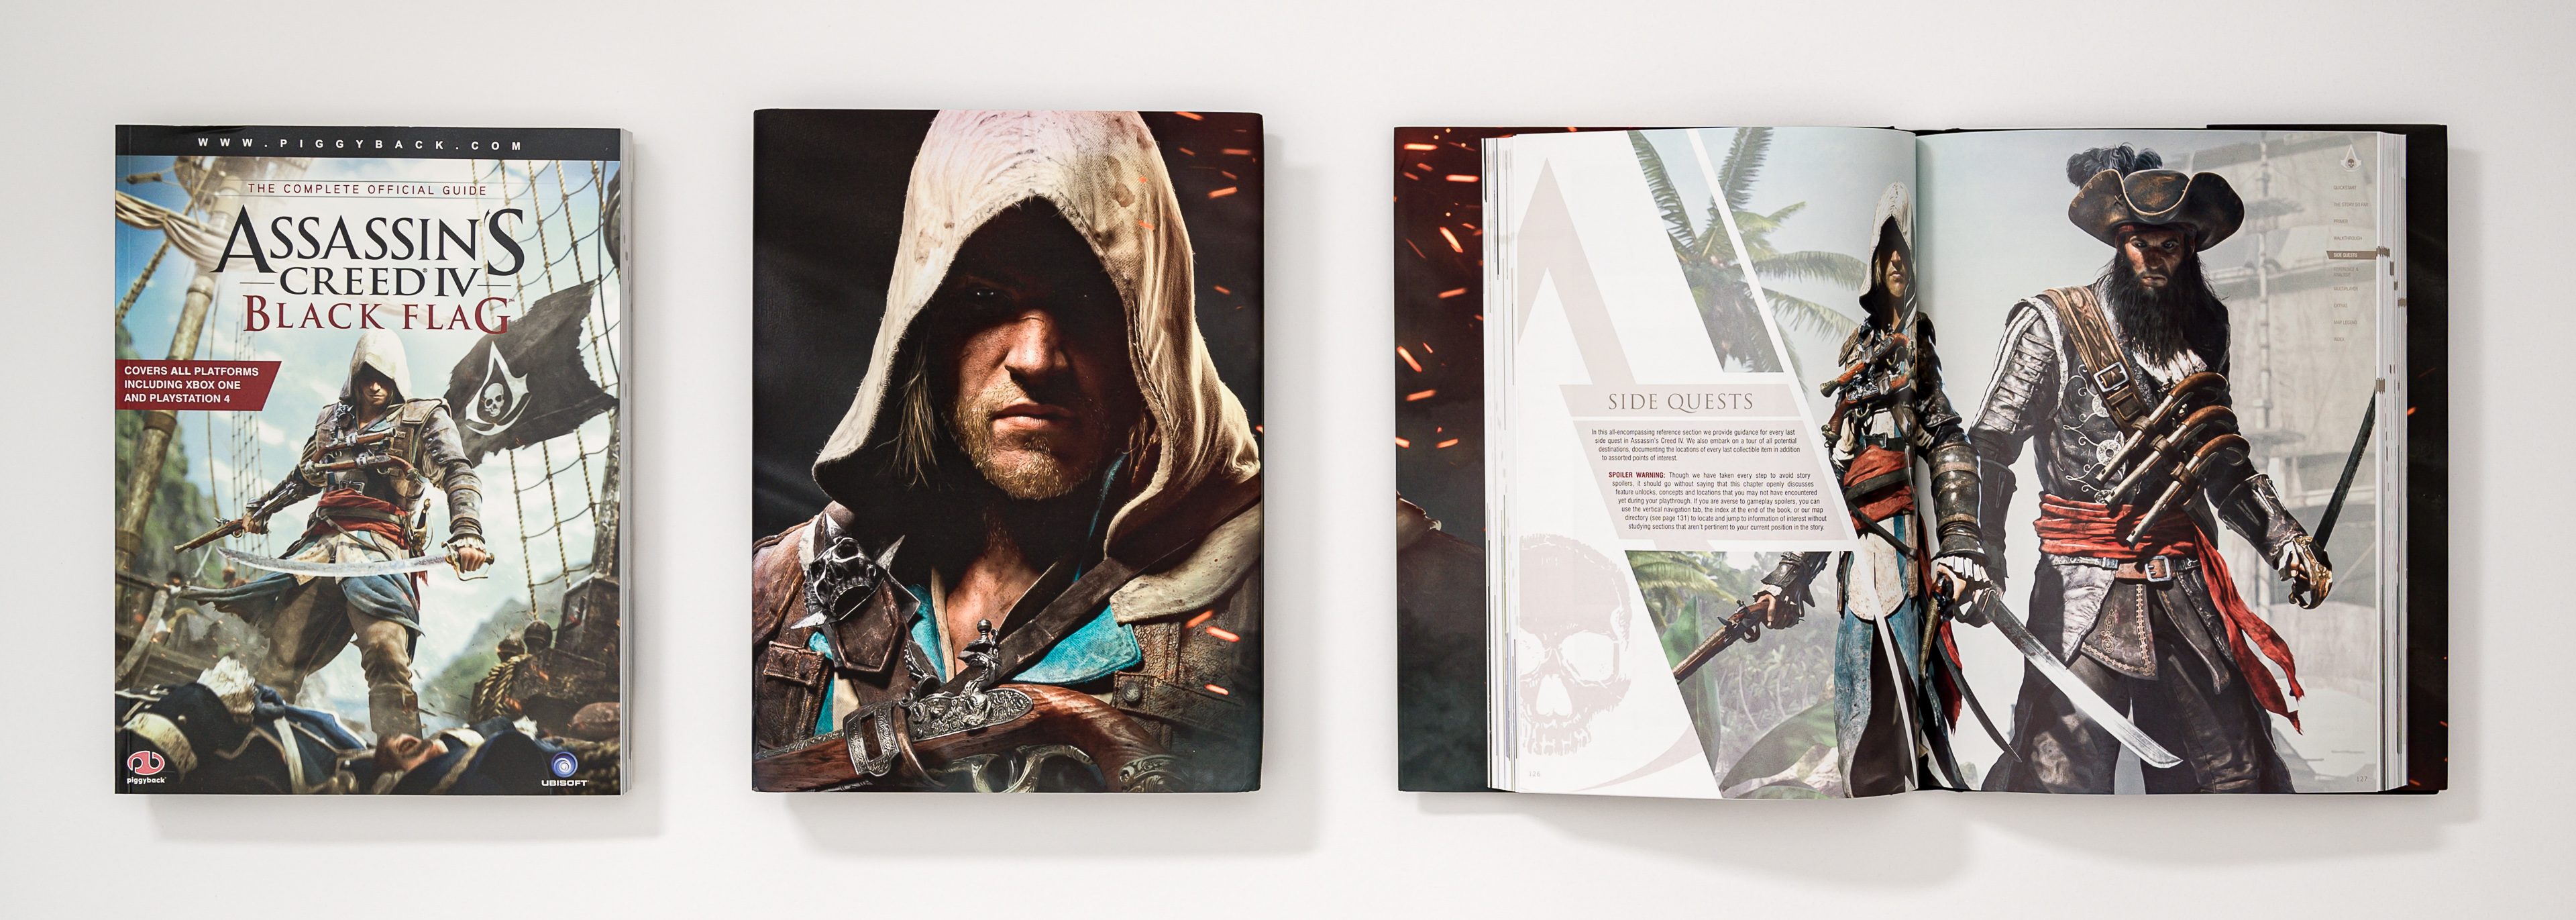 Assassin's Creed 4 Black Flag  Redingote Up! Trophy Guide 